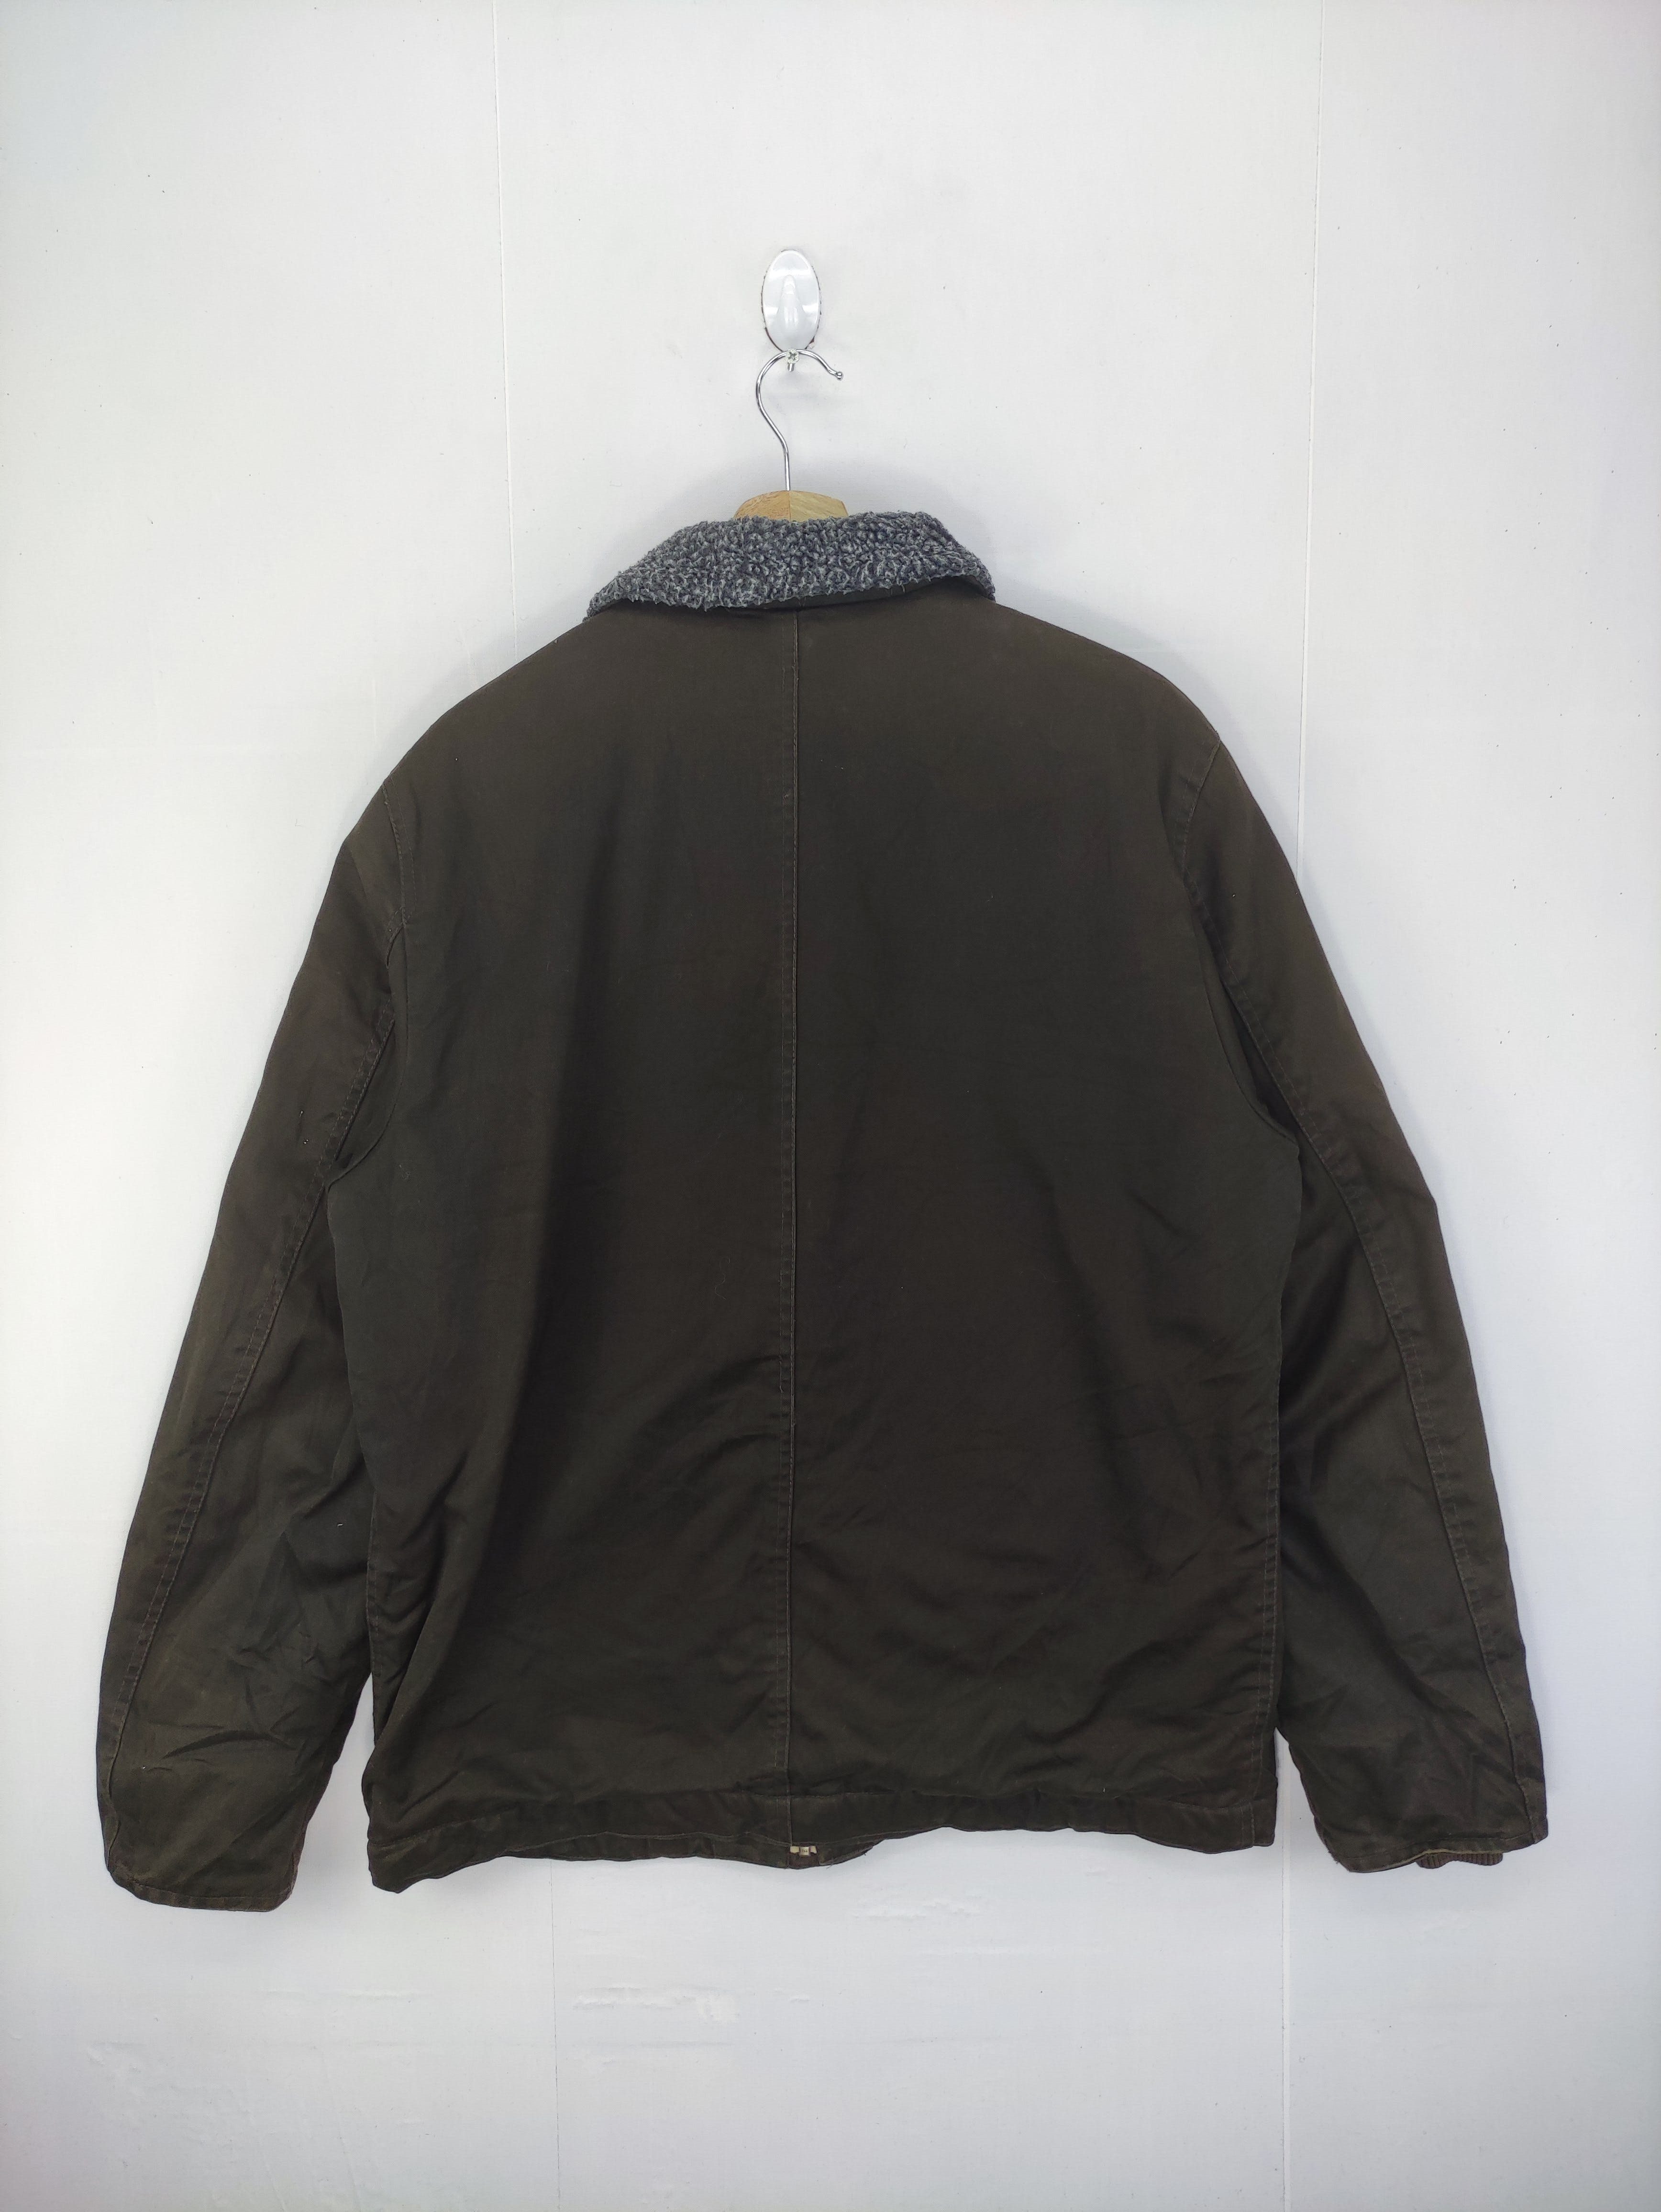 Vintage Takeo Kikuchi Jacket Lining Fleece Zipper - 7